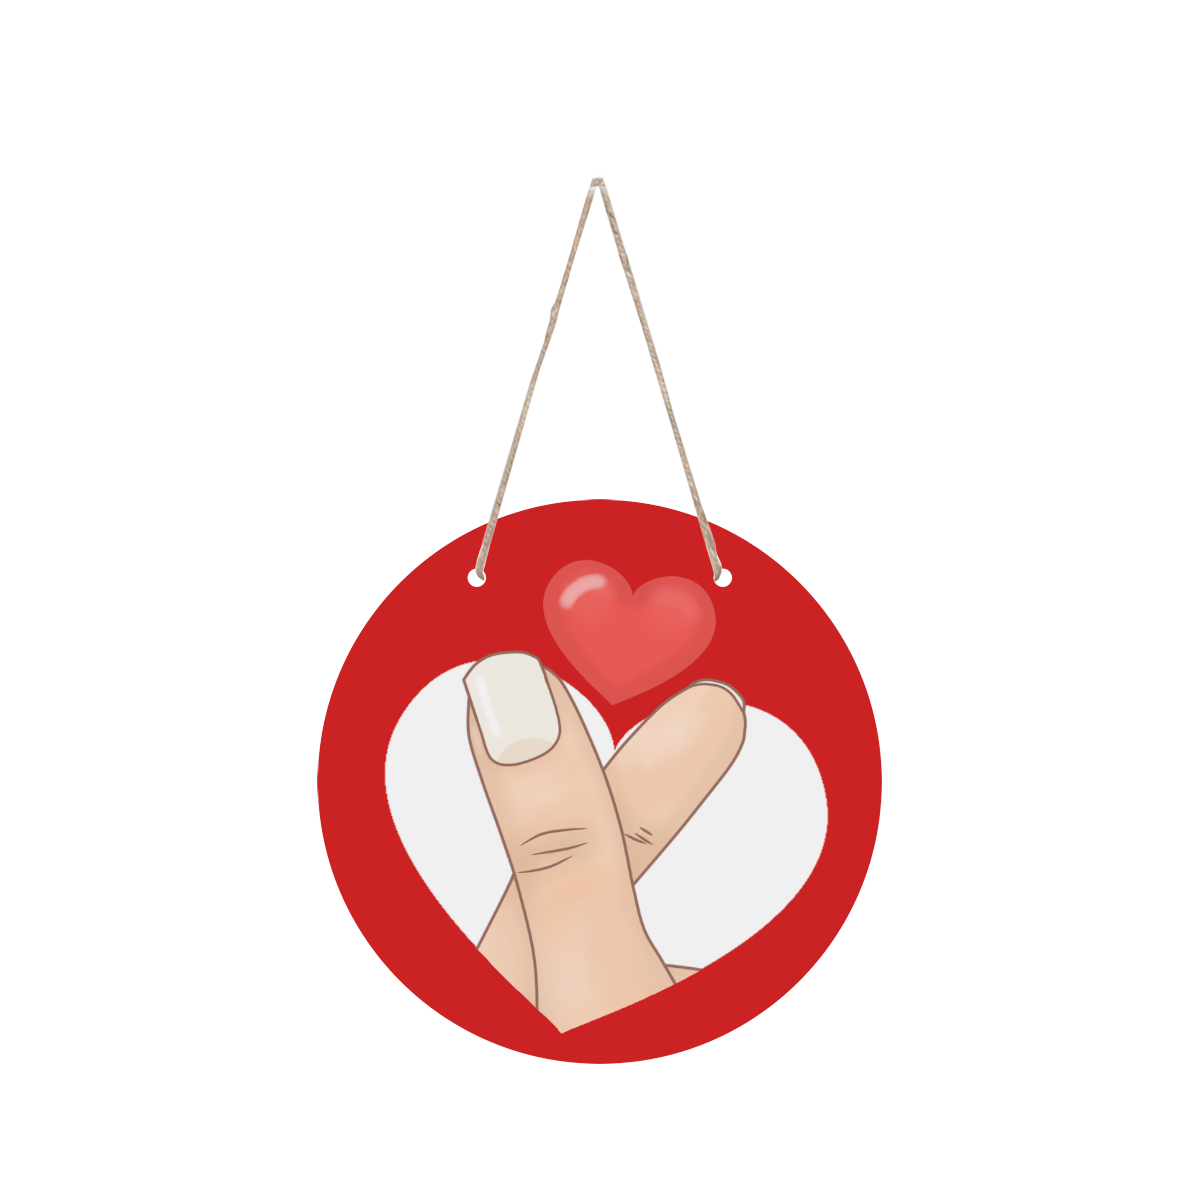 Finger Heart on Red Round Wood Door Hanging Sign